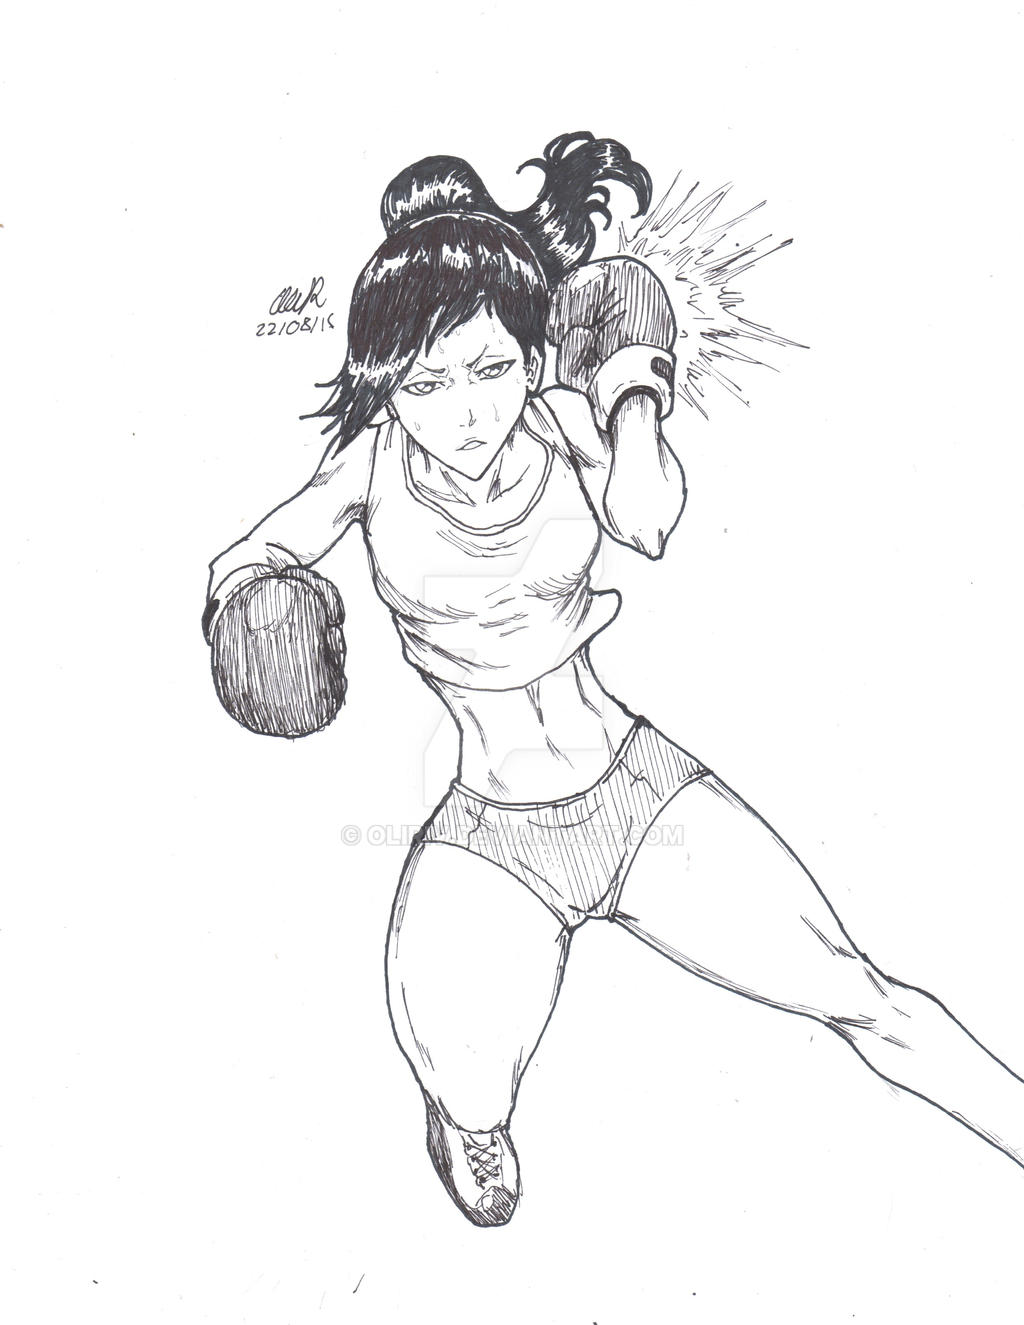 Nanao chan female boxer by Oliriv on DeviantArt